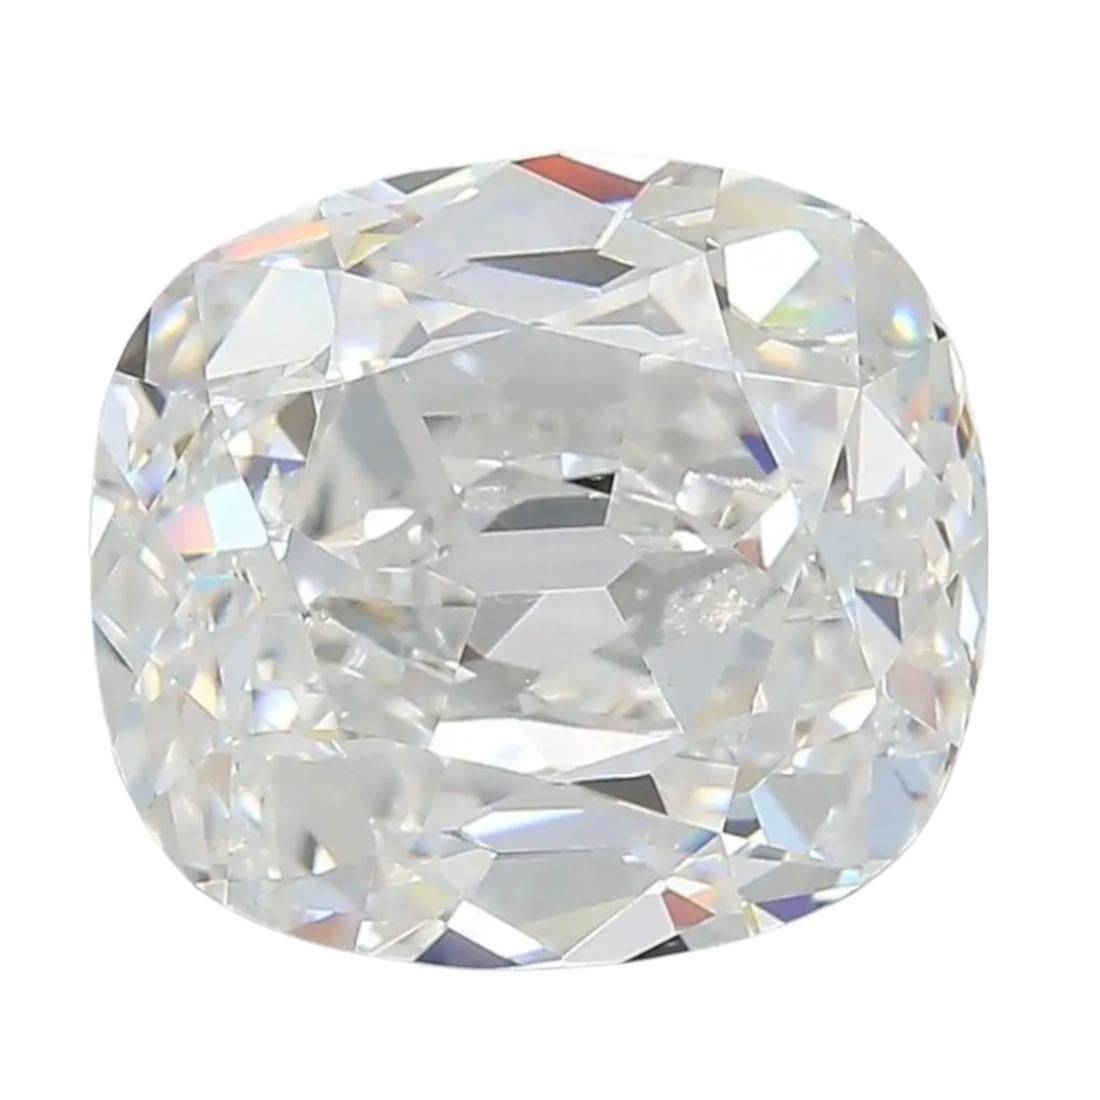 GIA Certified 4.69 Carat Old Mine Cut Diamond Engagement Ring
100% eye clean